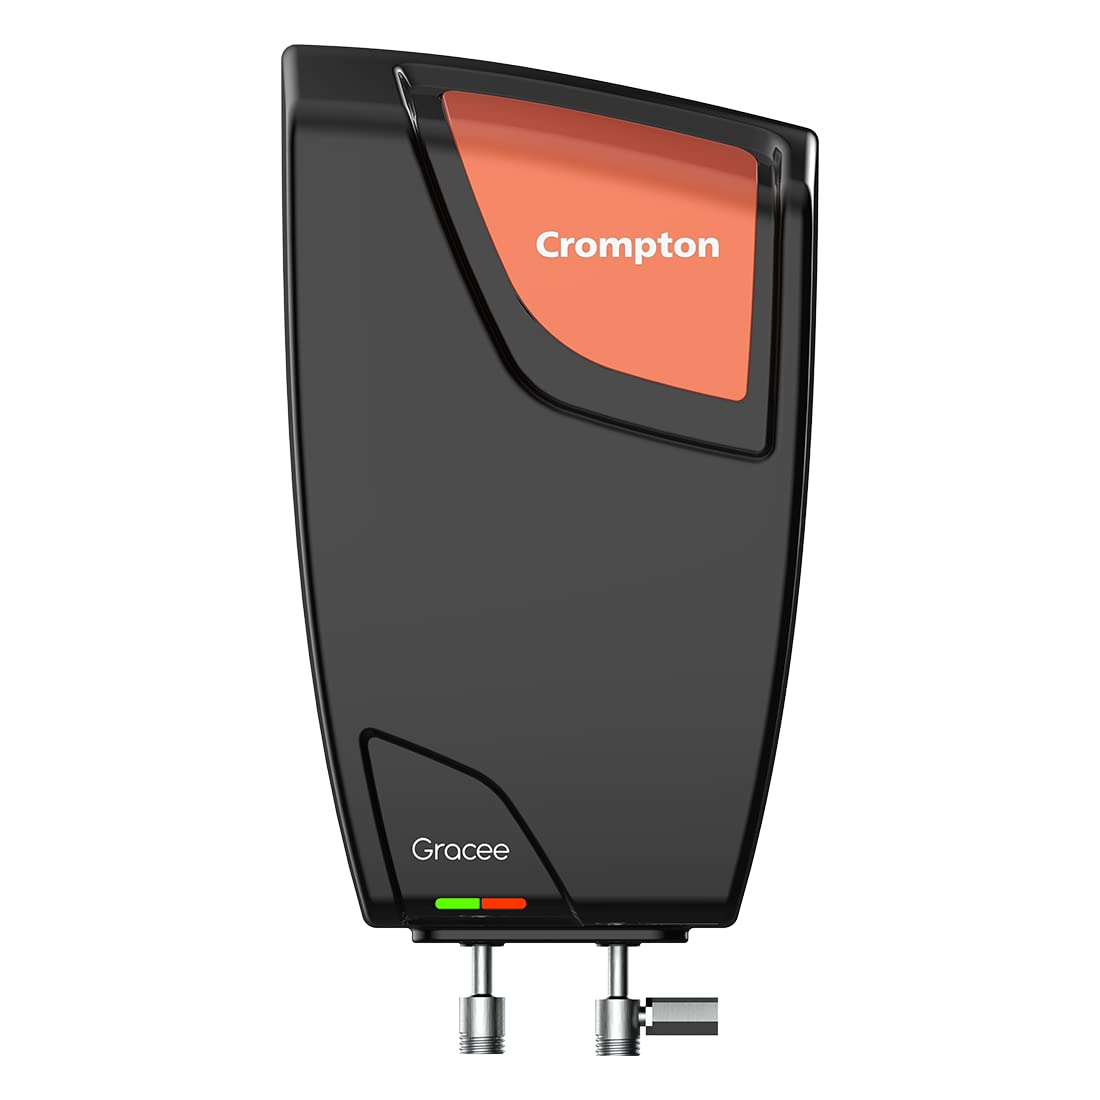 Crompton Gracee 5-L Instant Water Heater